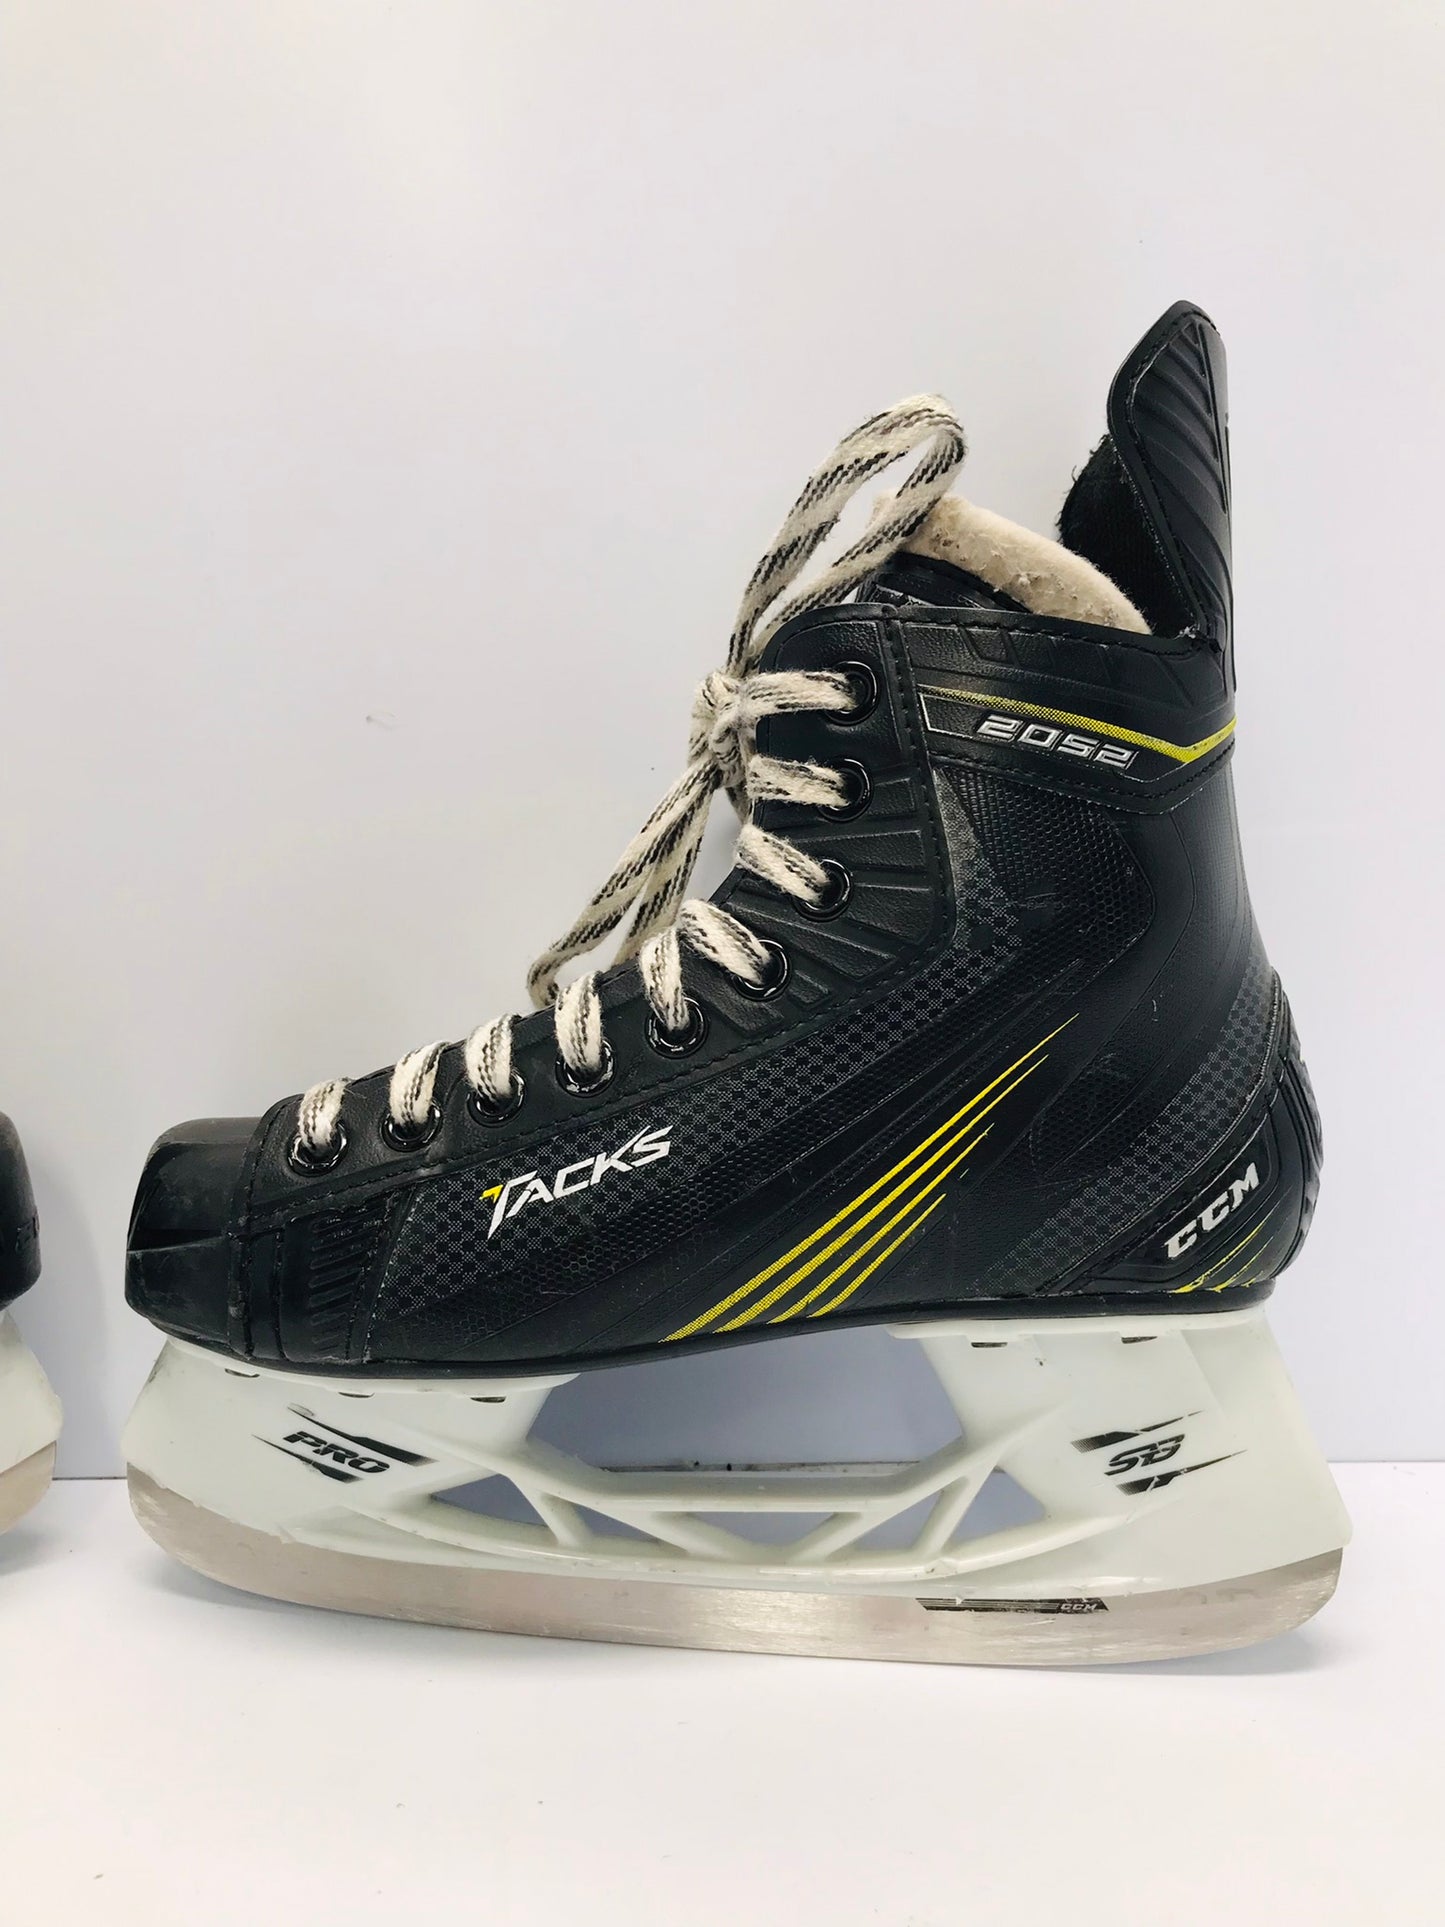 Hockey Skates Child Size 3.5 Shoe Size Skate Size 2 CCM Tacks